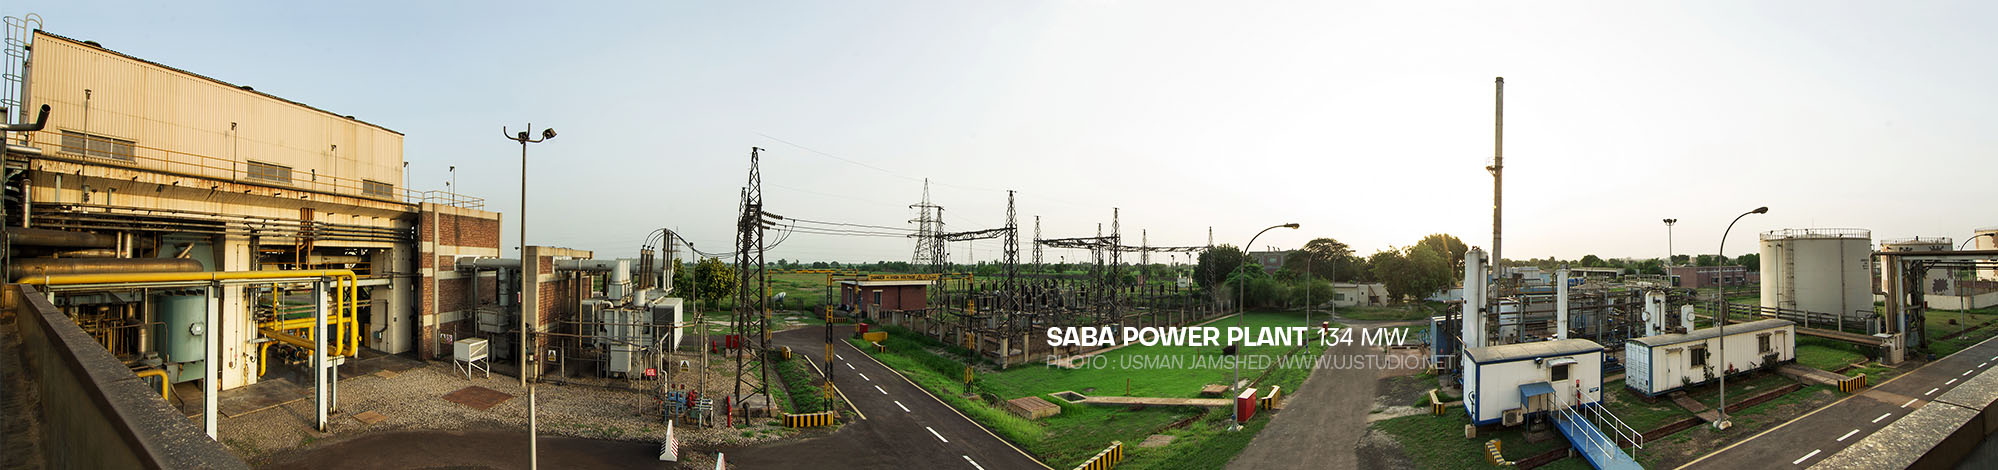 saba-power-plant-08